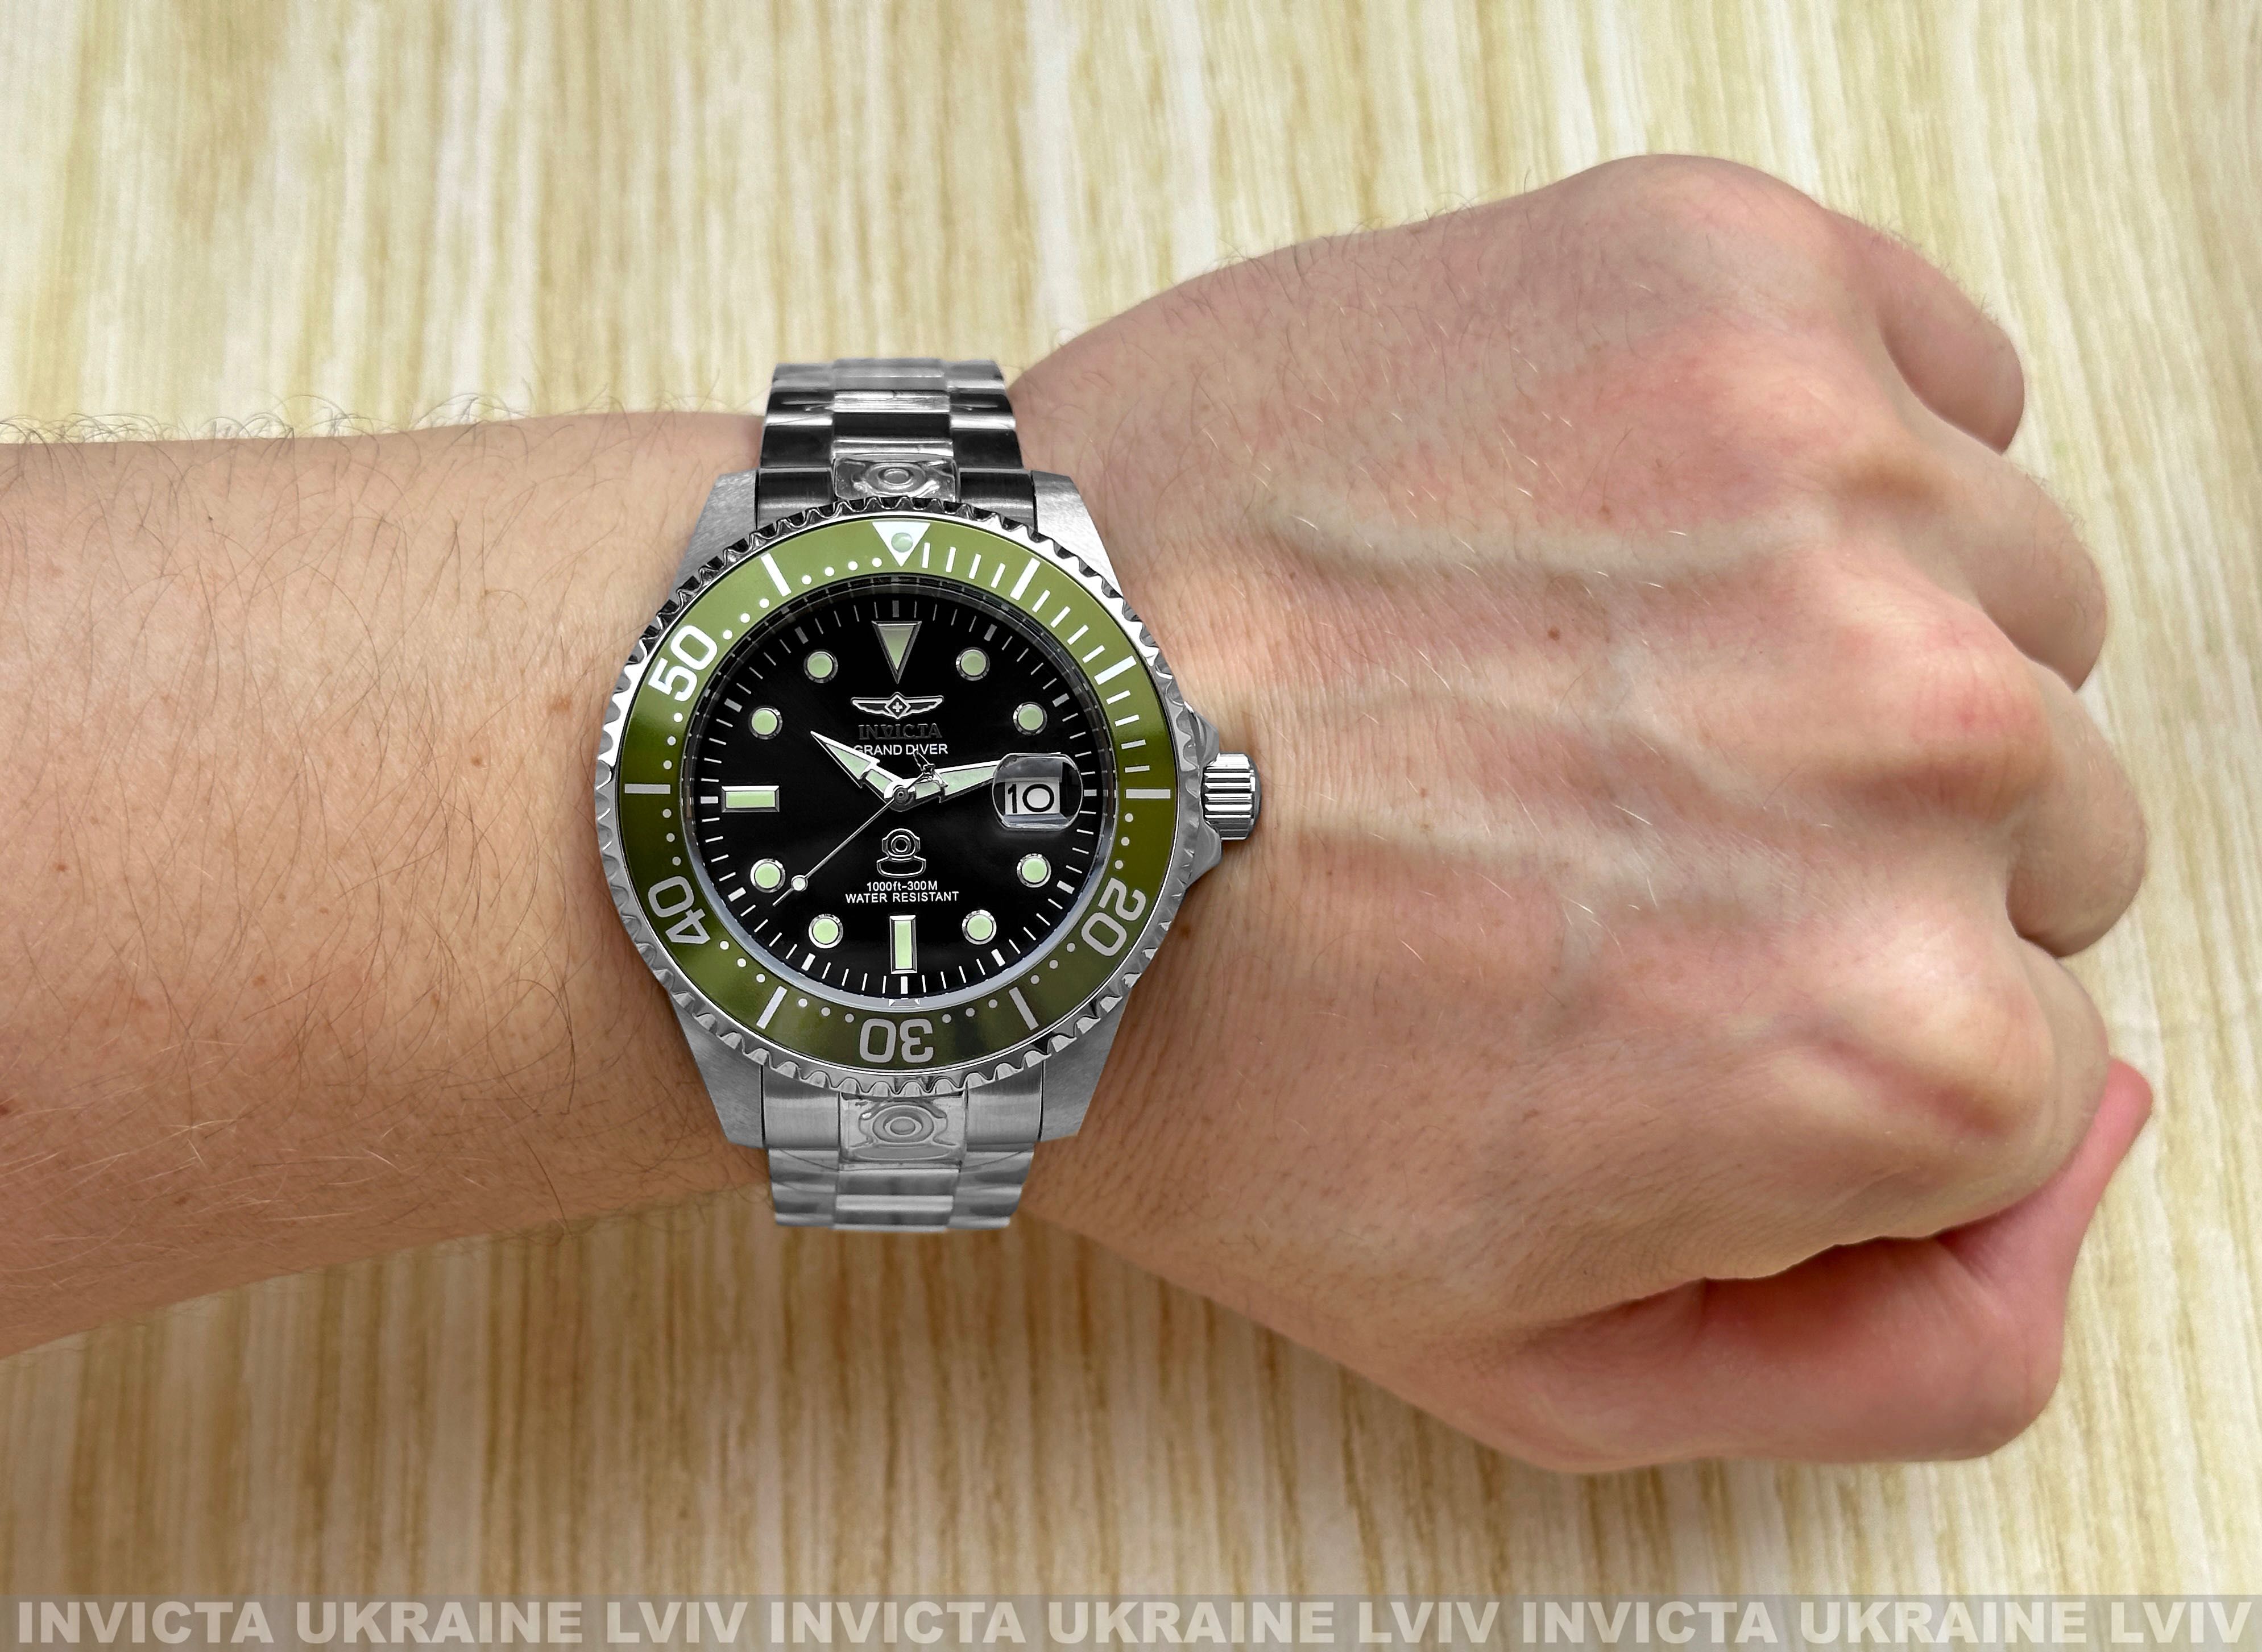 Часы Invicta 27612 Grand Diver Automatic Green Black 47 мм. 300 MT.